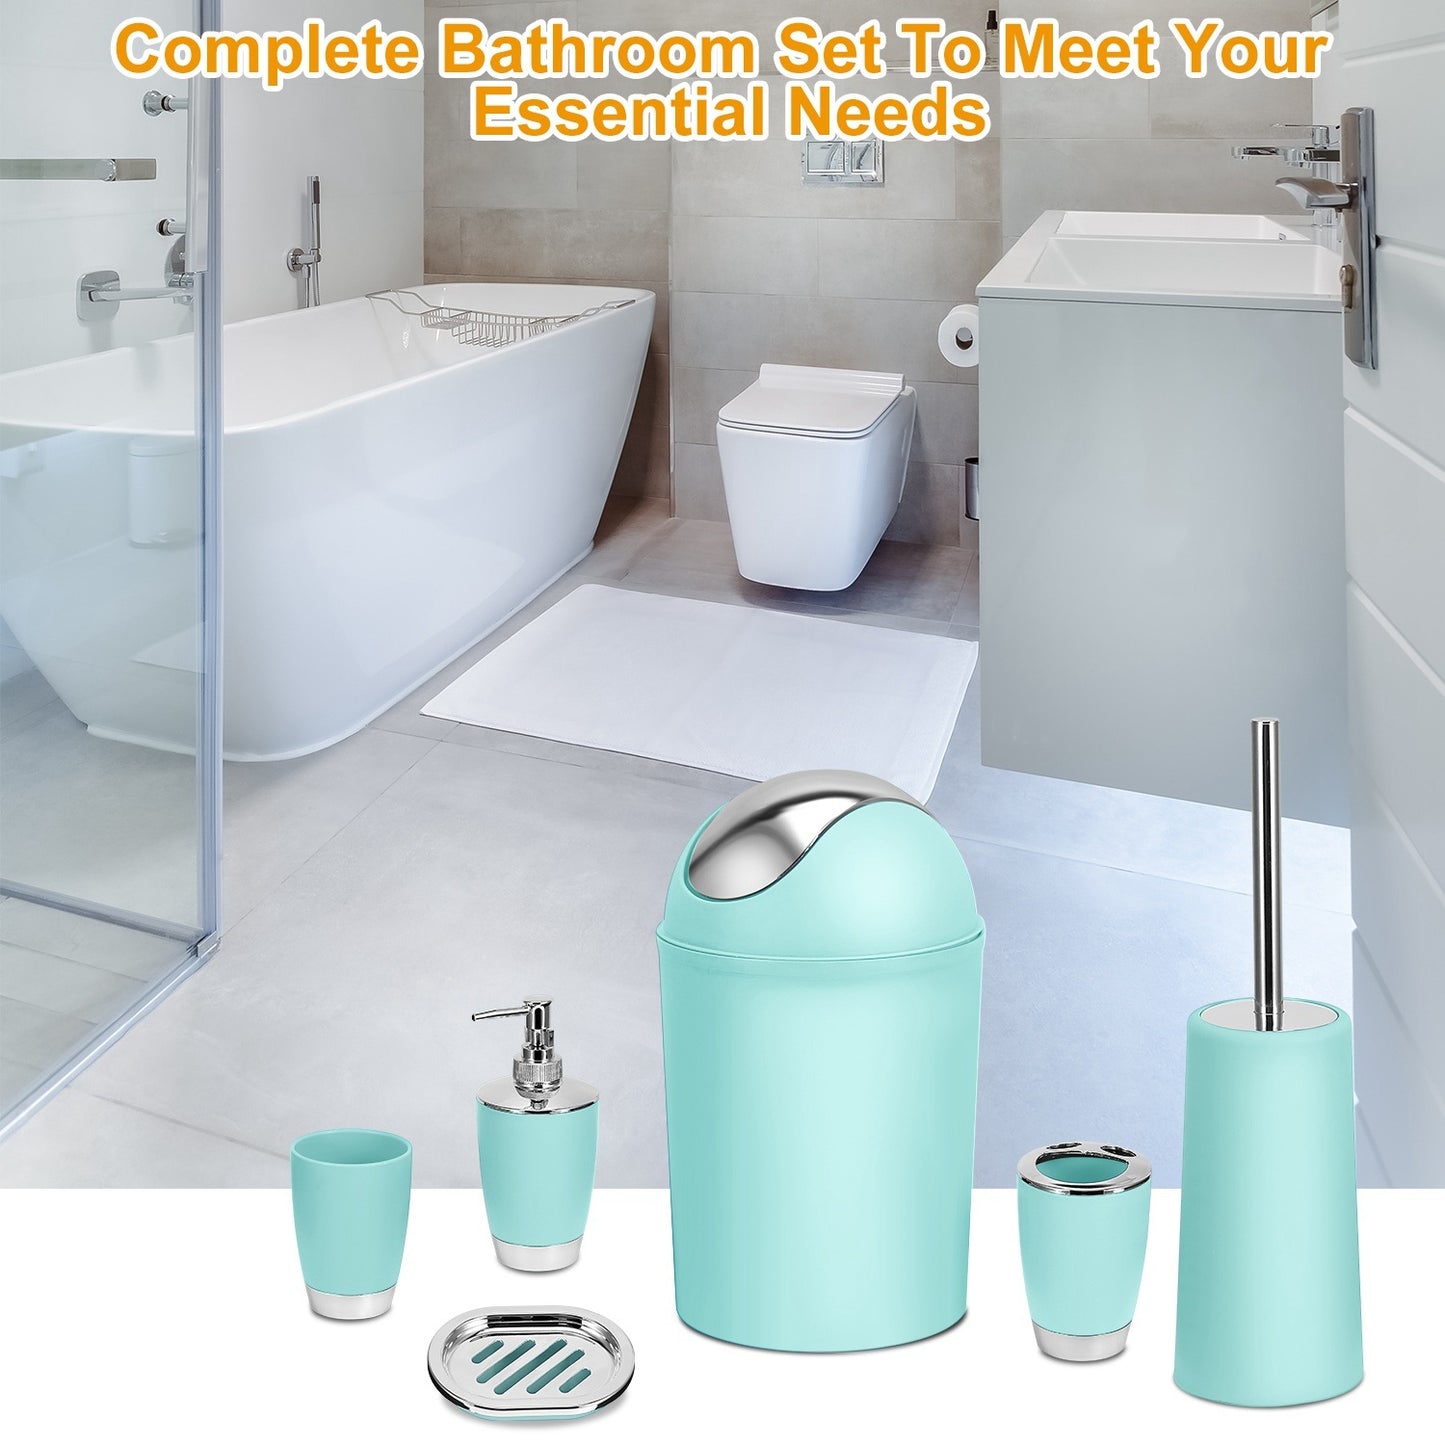 Bathroom Accessories Set 6 Pcs Bathroom Set Ensemble Complete Soap Dispenser Toothbrush Holder